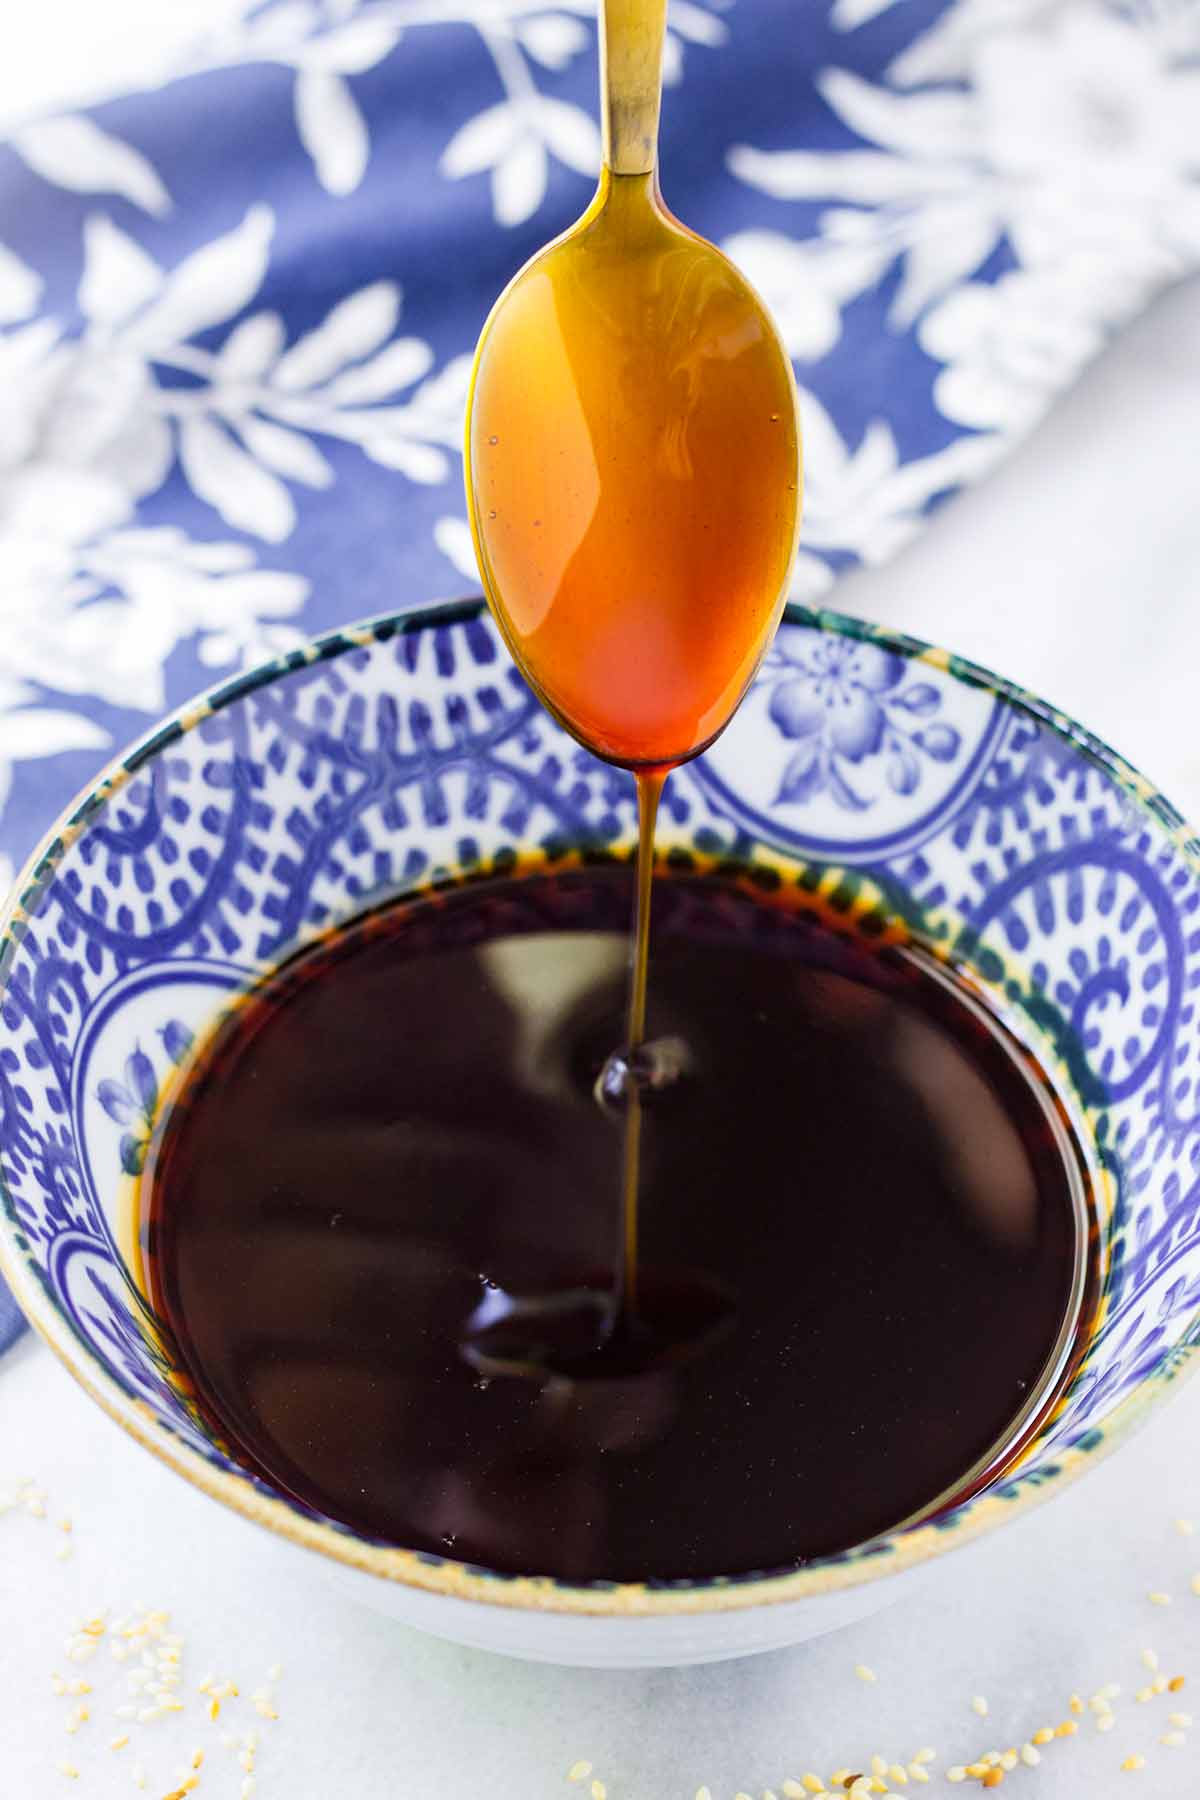 homemade teriyaki sauce dripping from a spoon onto a bowl